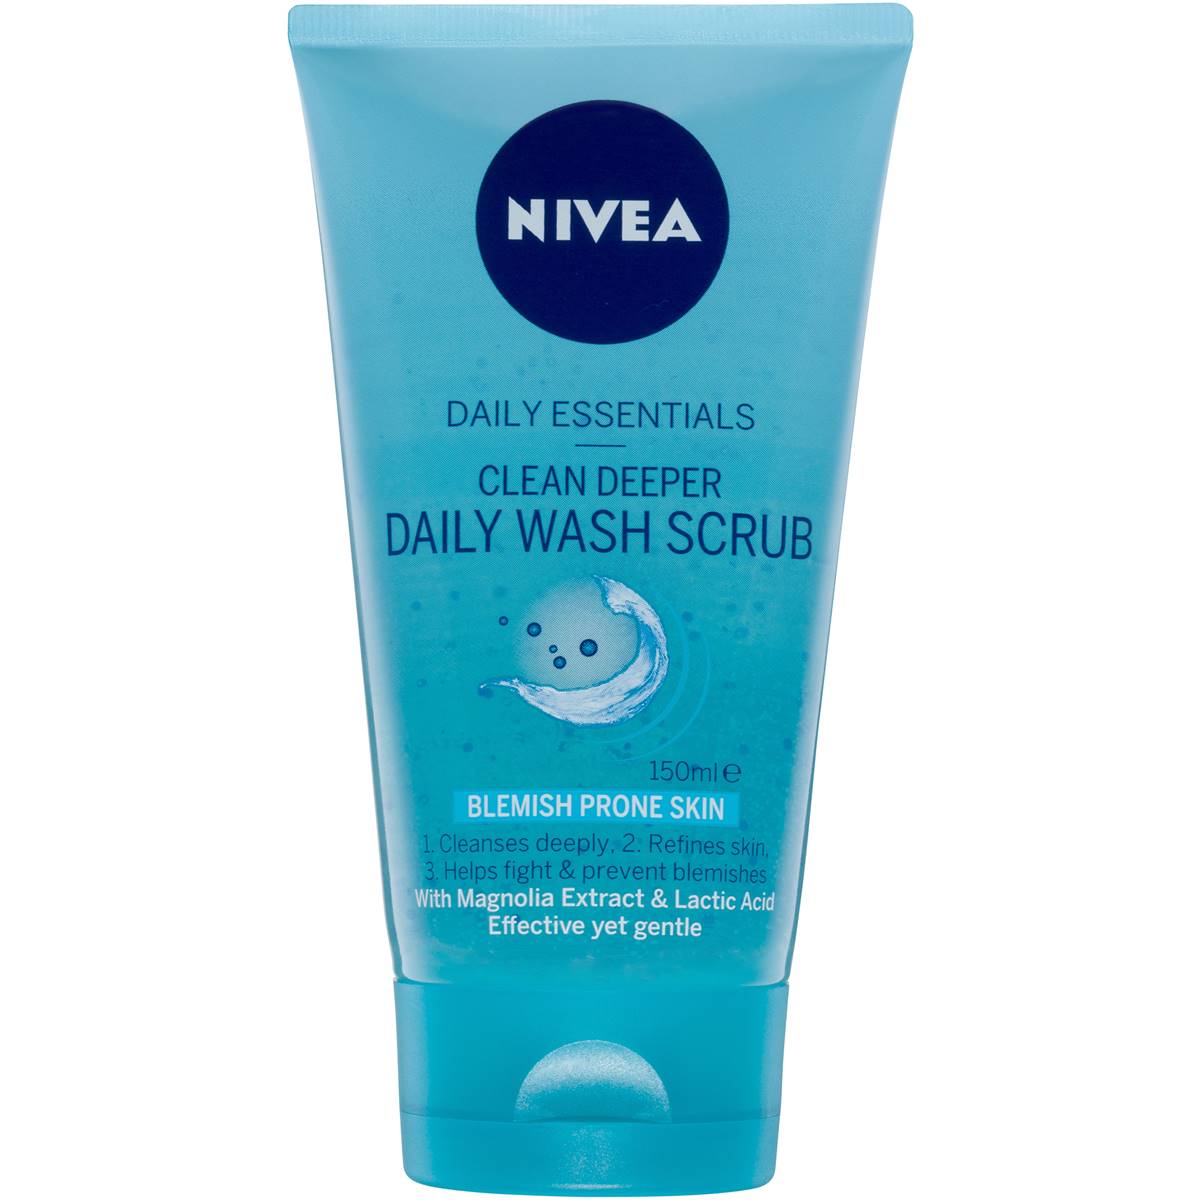 Nivea Daily Essentials Face Wash Clean Deeper Daily Wash Scrub 150ml